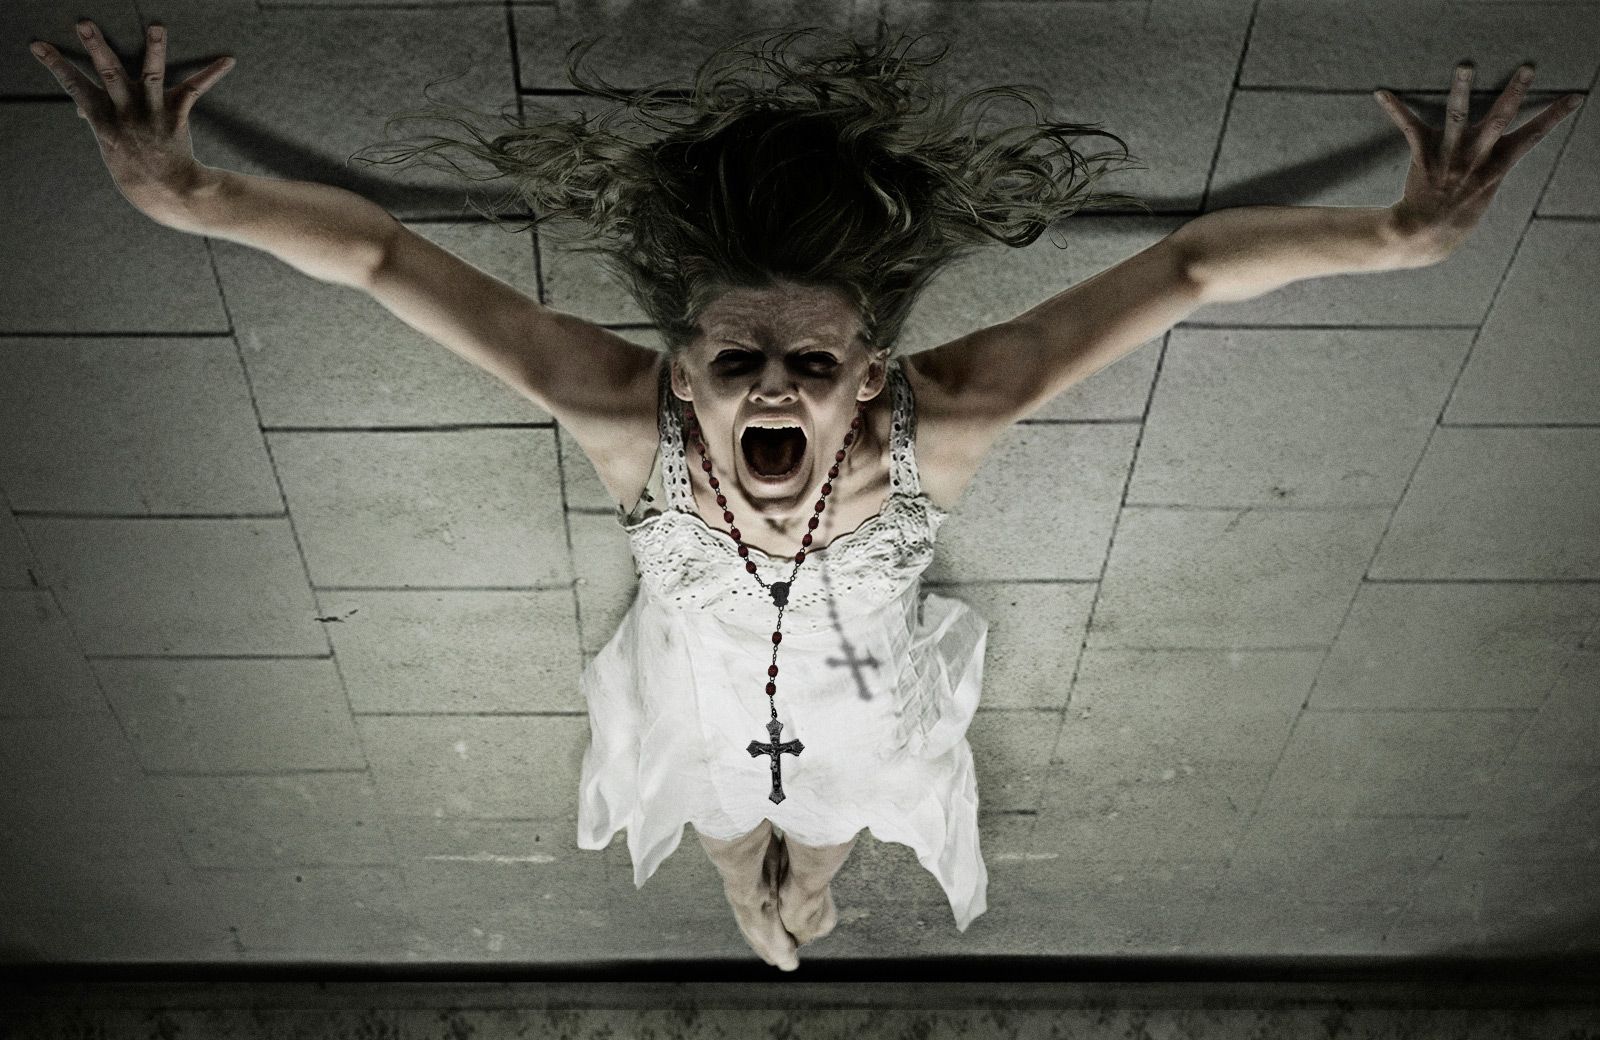 The Last Exorcism Part II photo